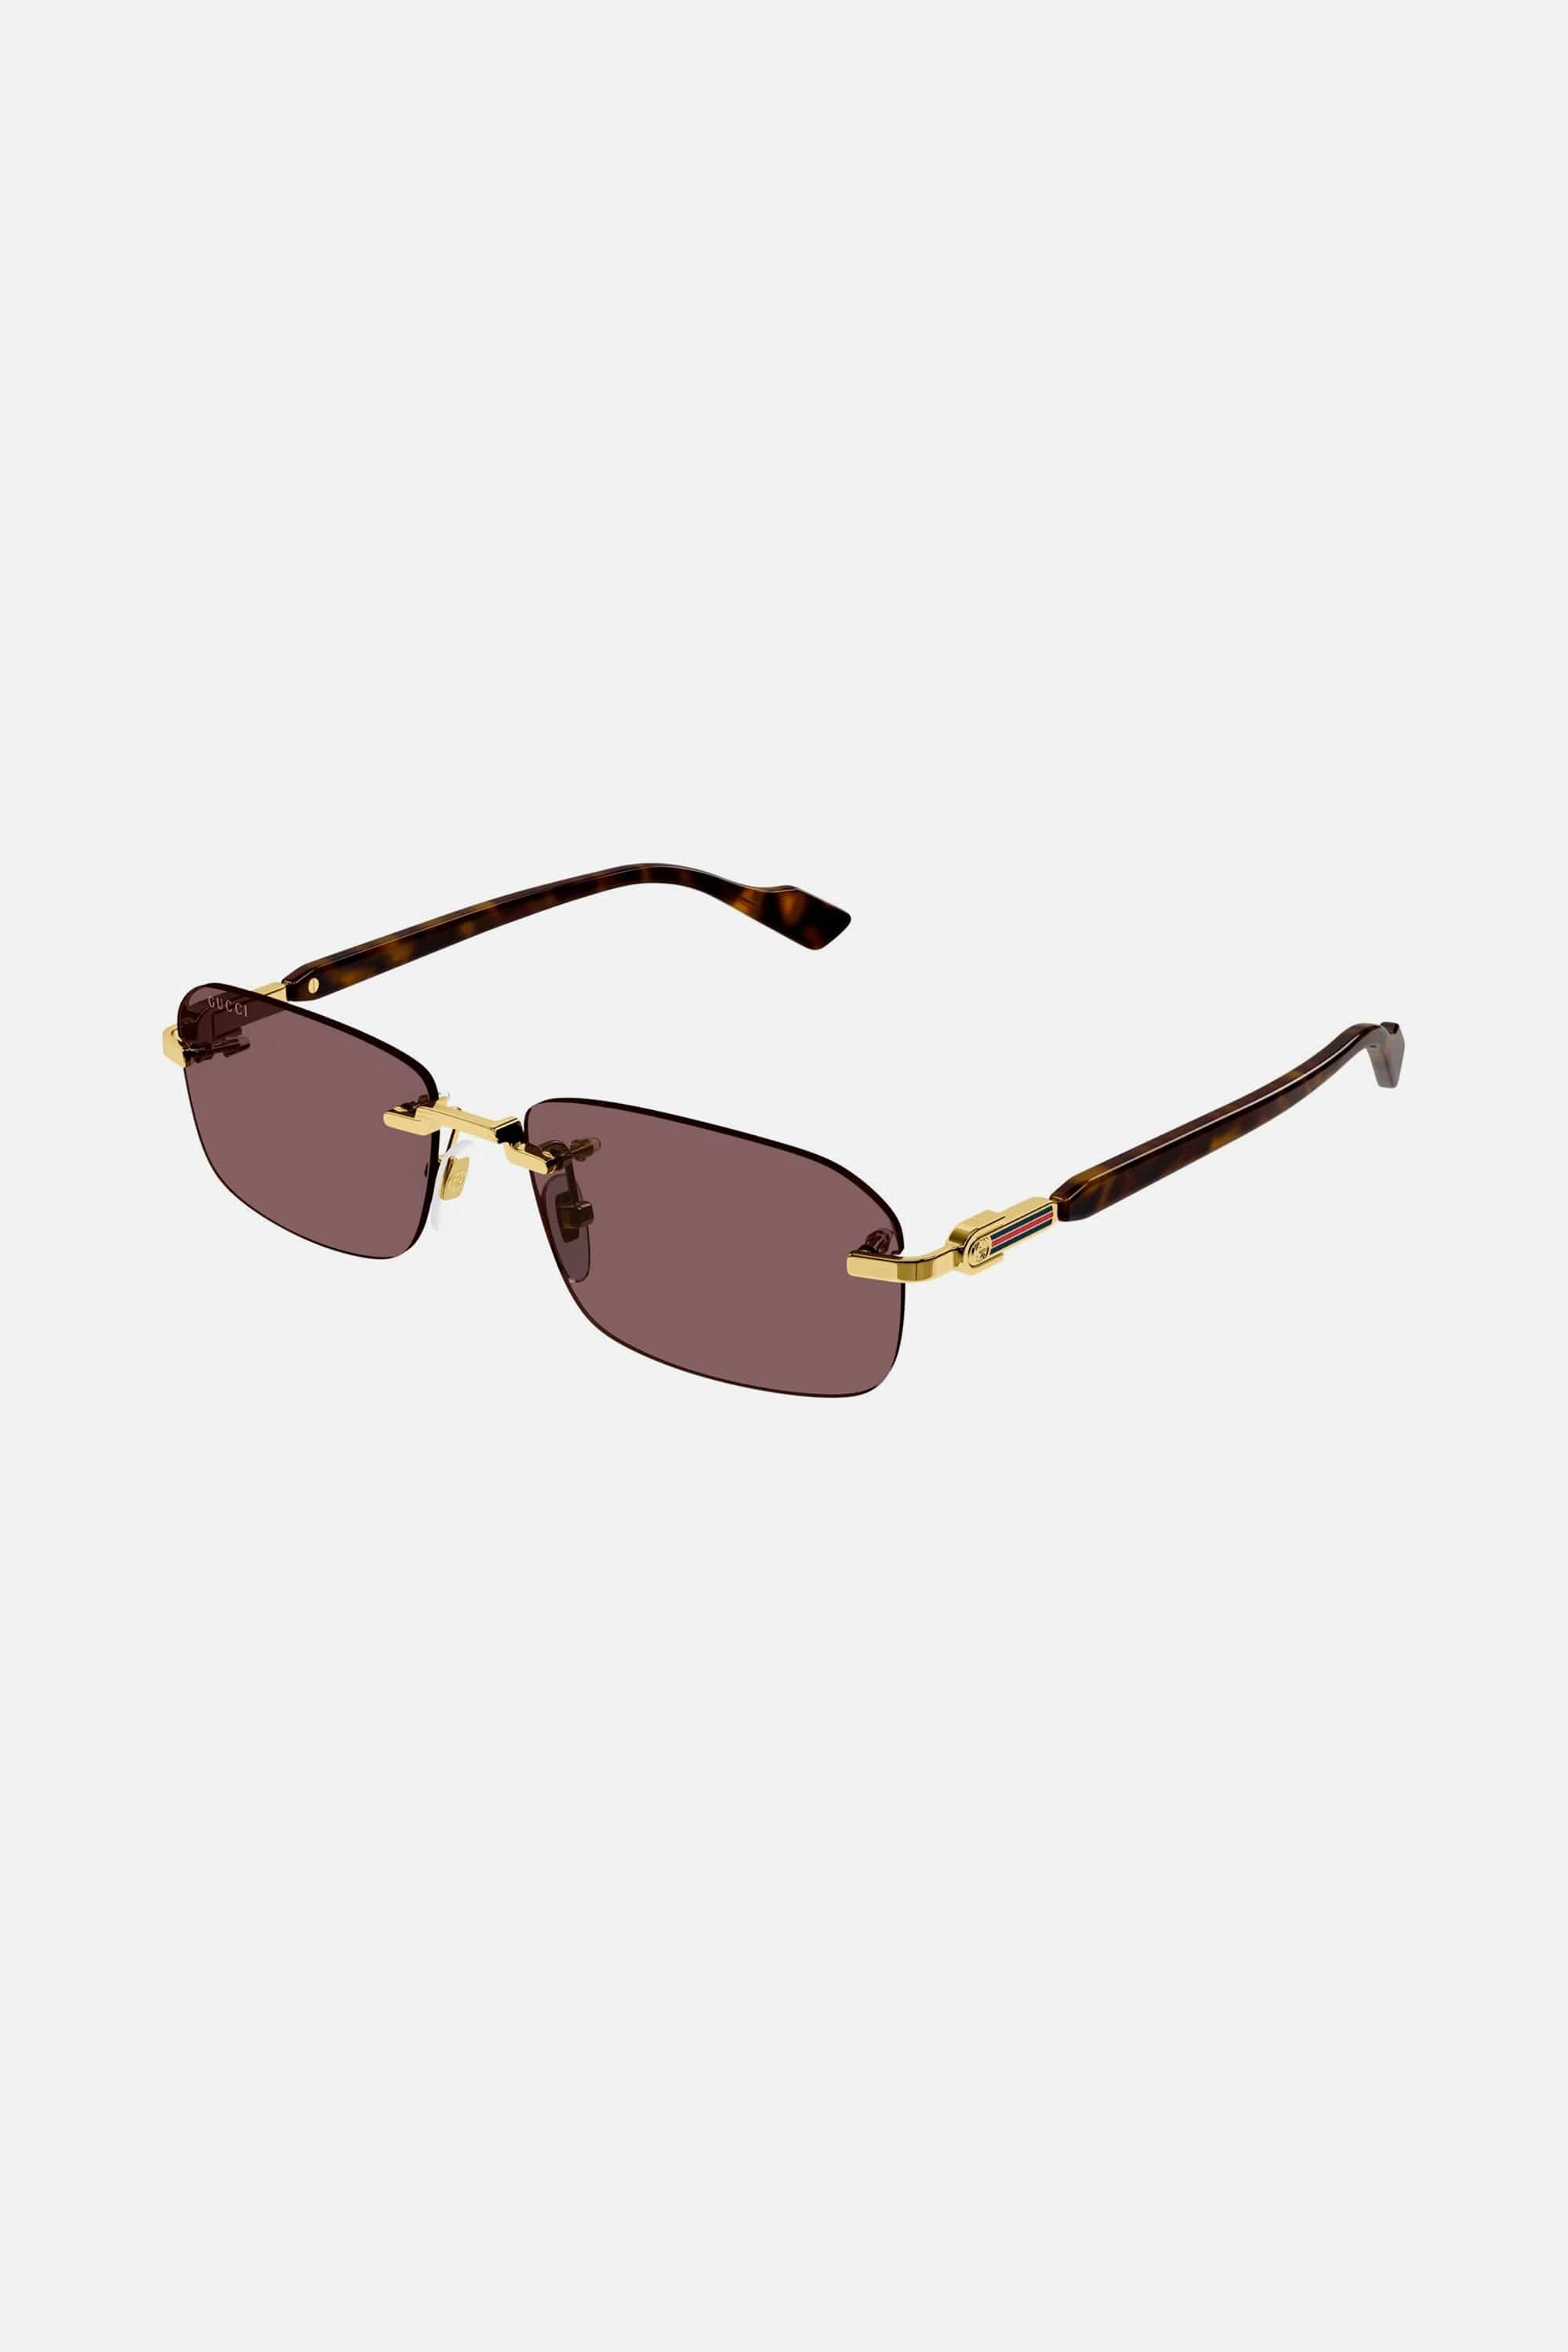 Gucci micro rimless metal gold and brown sunglasses - Eyewear Club